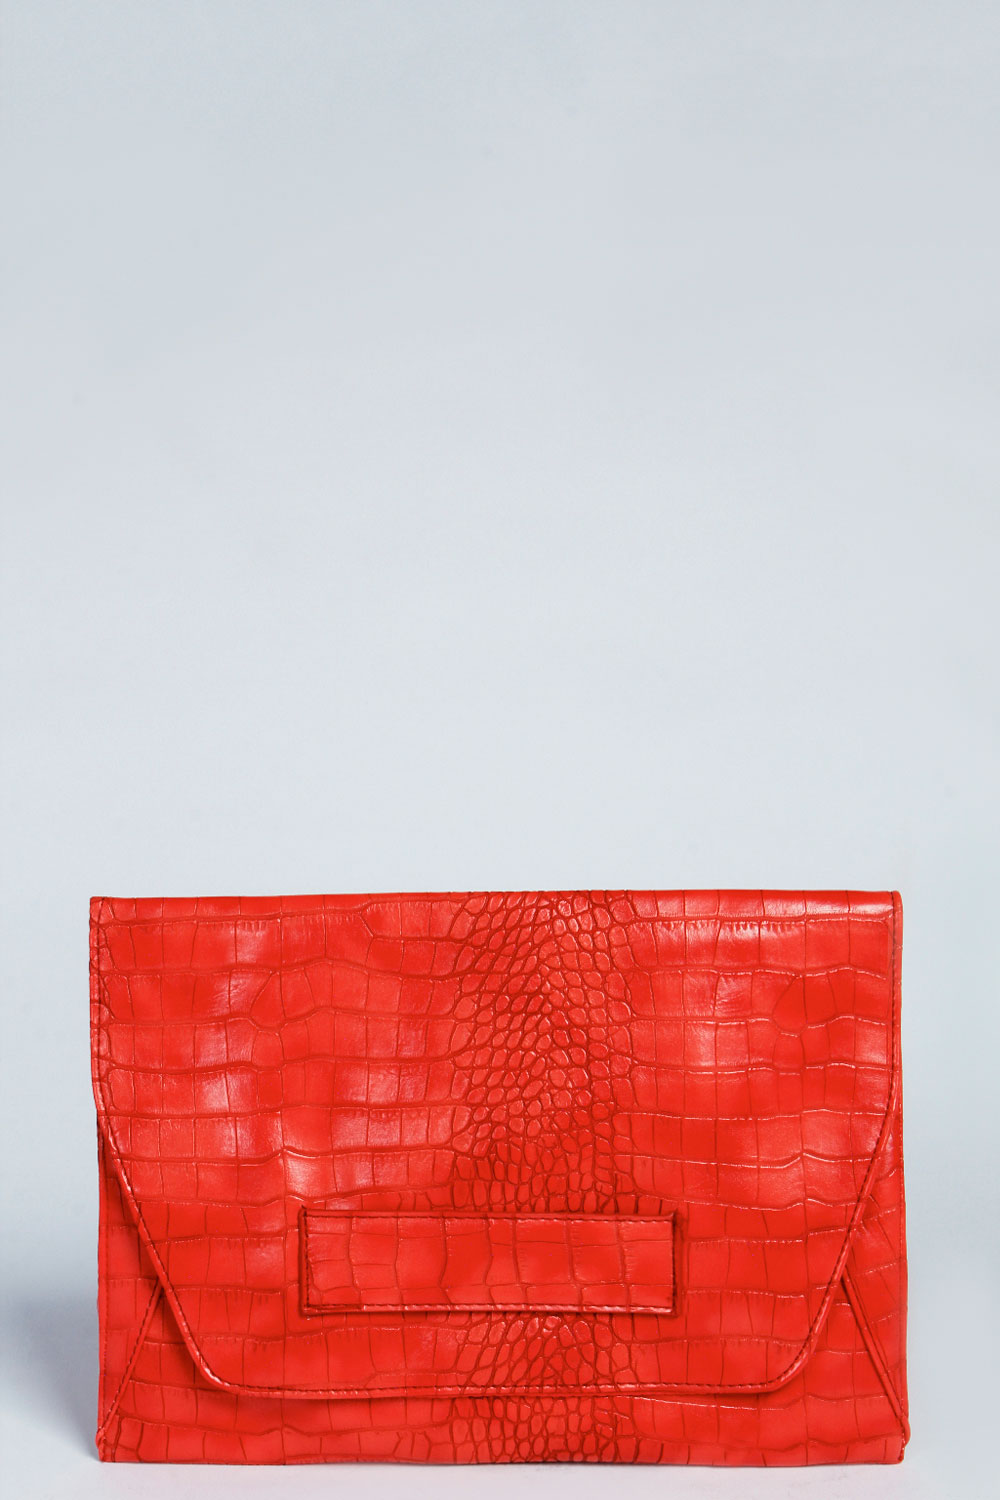 boohoo Lola Croc Handle Strap Clutch Bag - red,